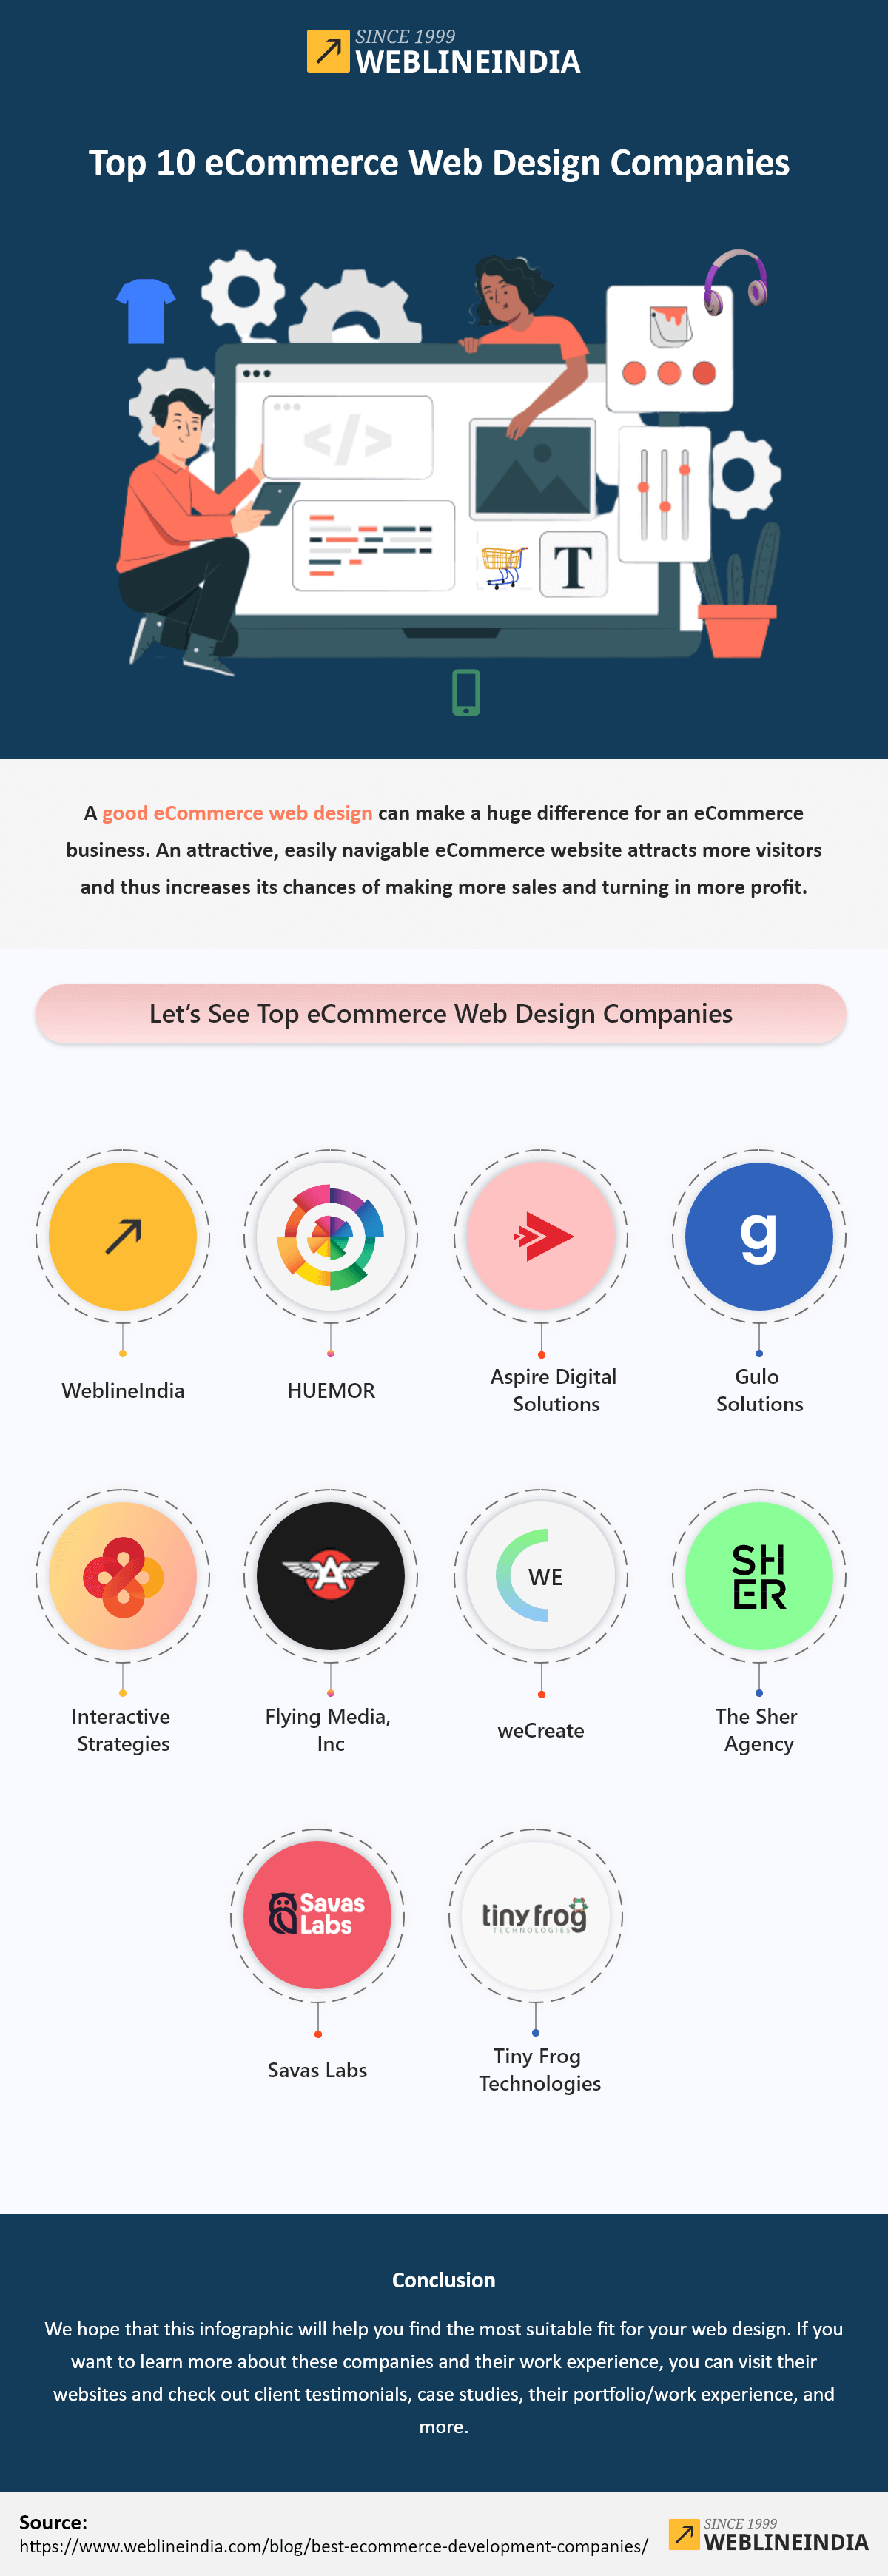 Top 10 eCommerce Web Design Companies - Infographic